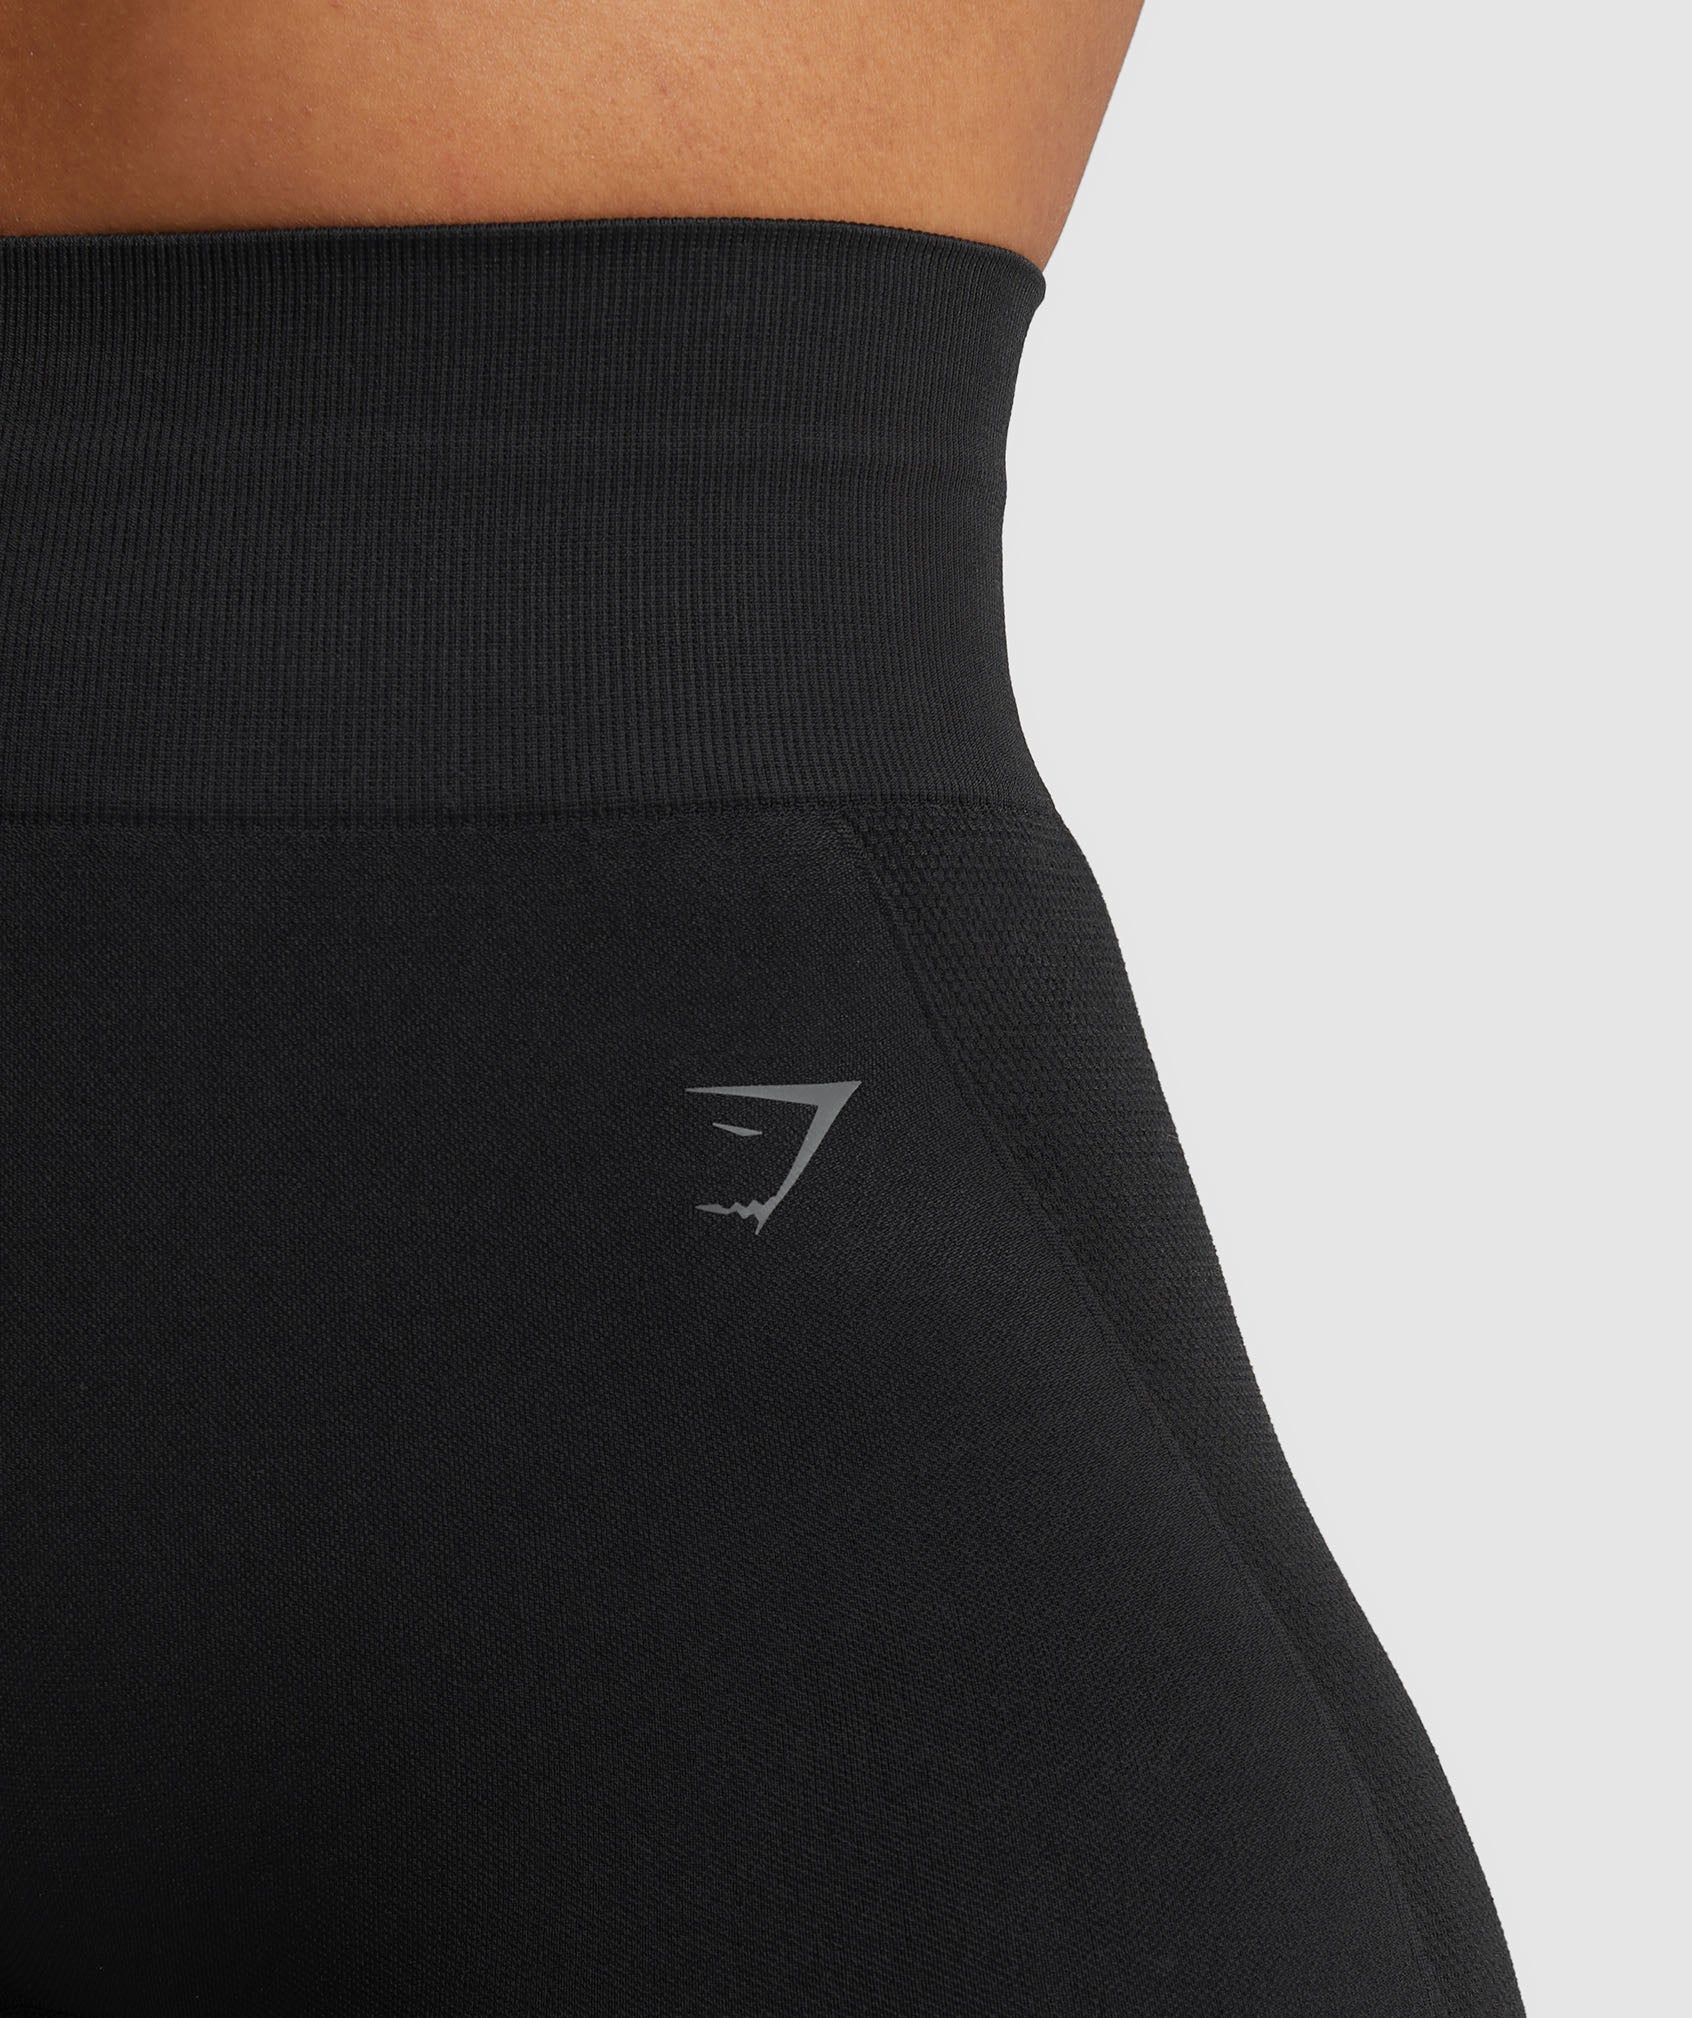 Flex Shorts in Black - view 5